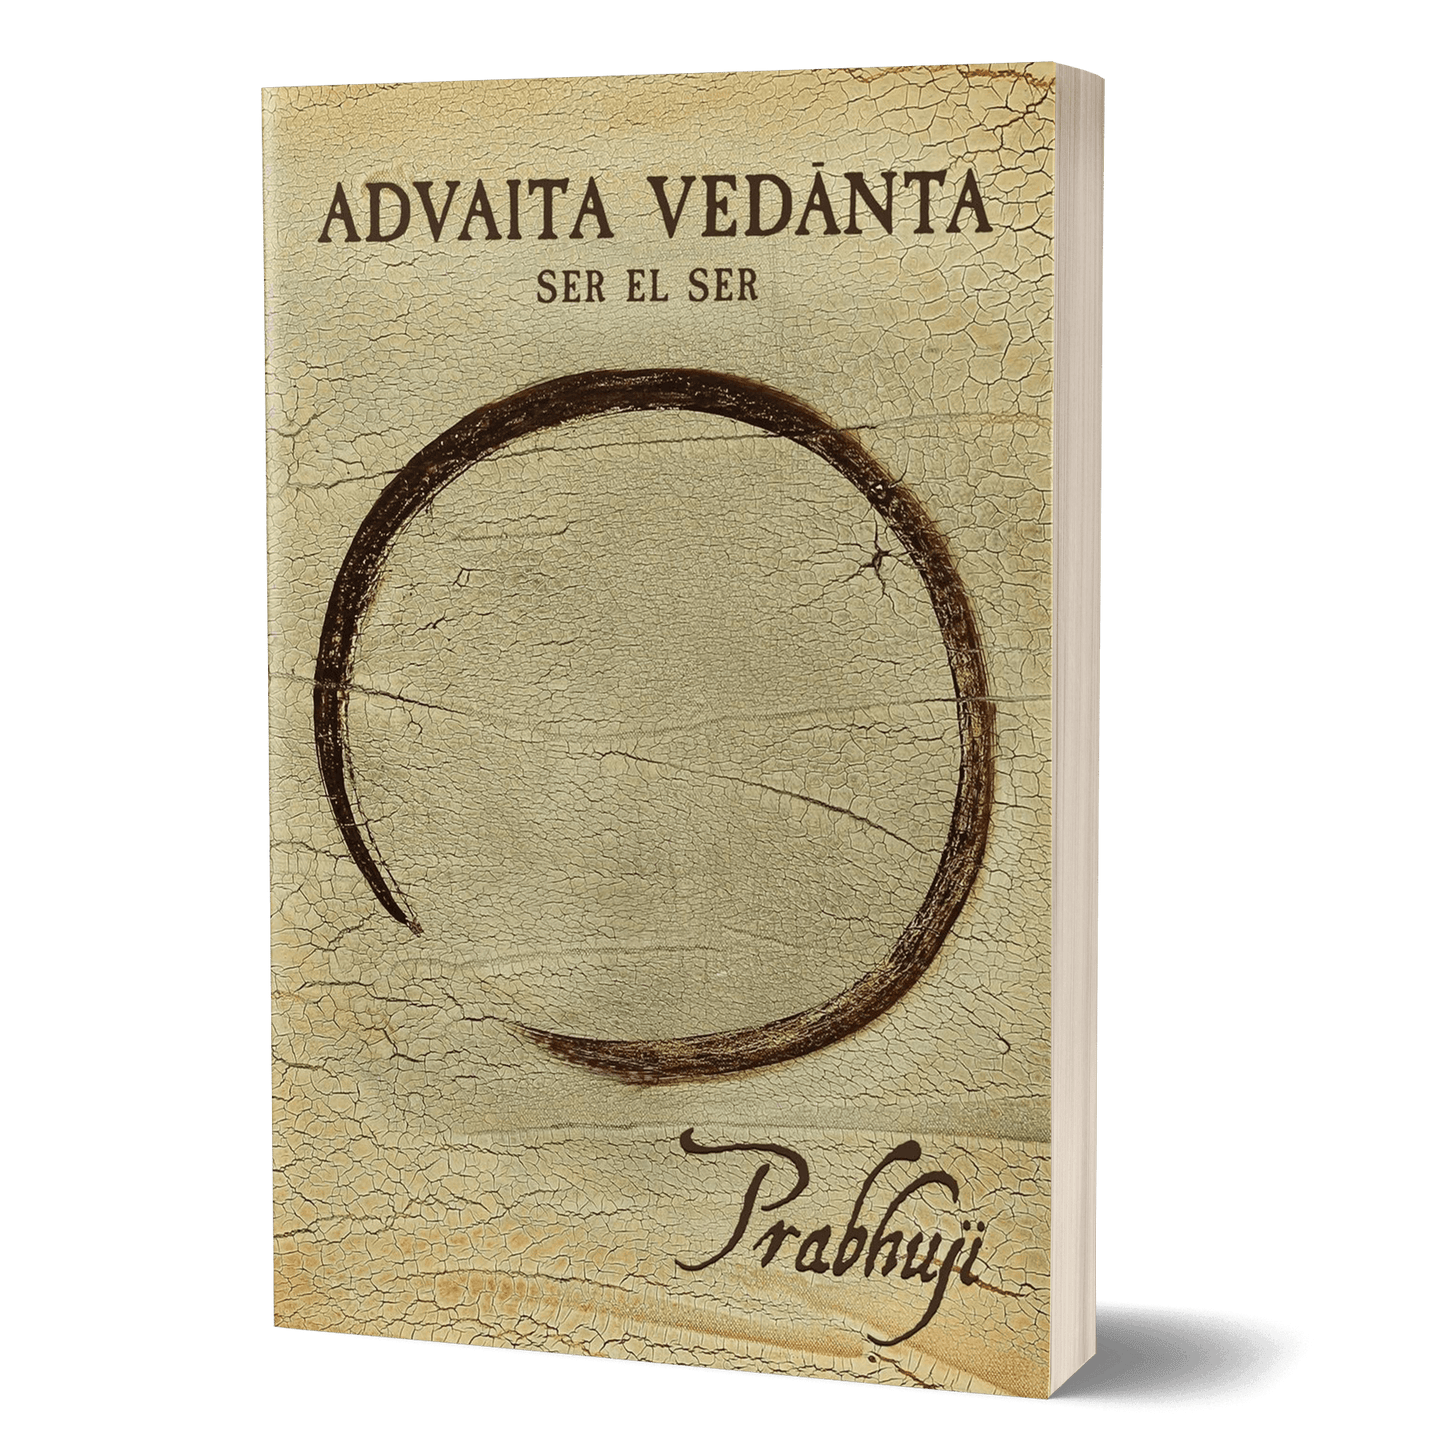 Advaita Vedanta - Ser el ser con Prabhuji (Paperback - Spanish) - Tree Spirit Wellness